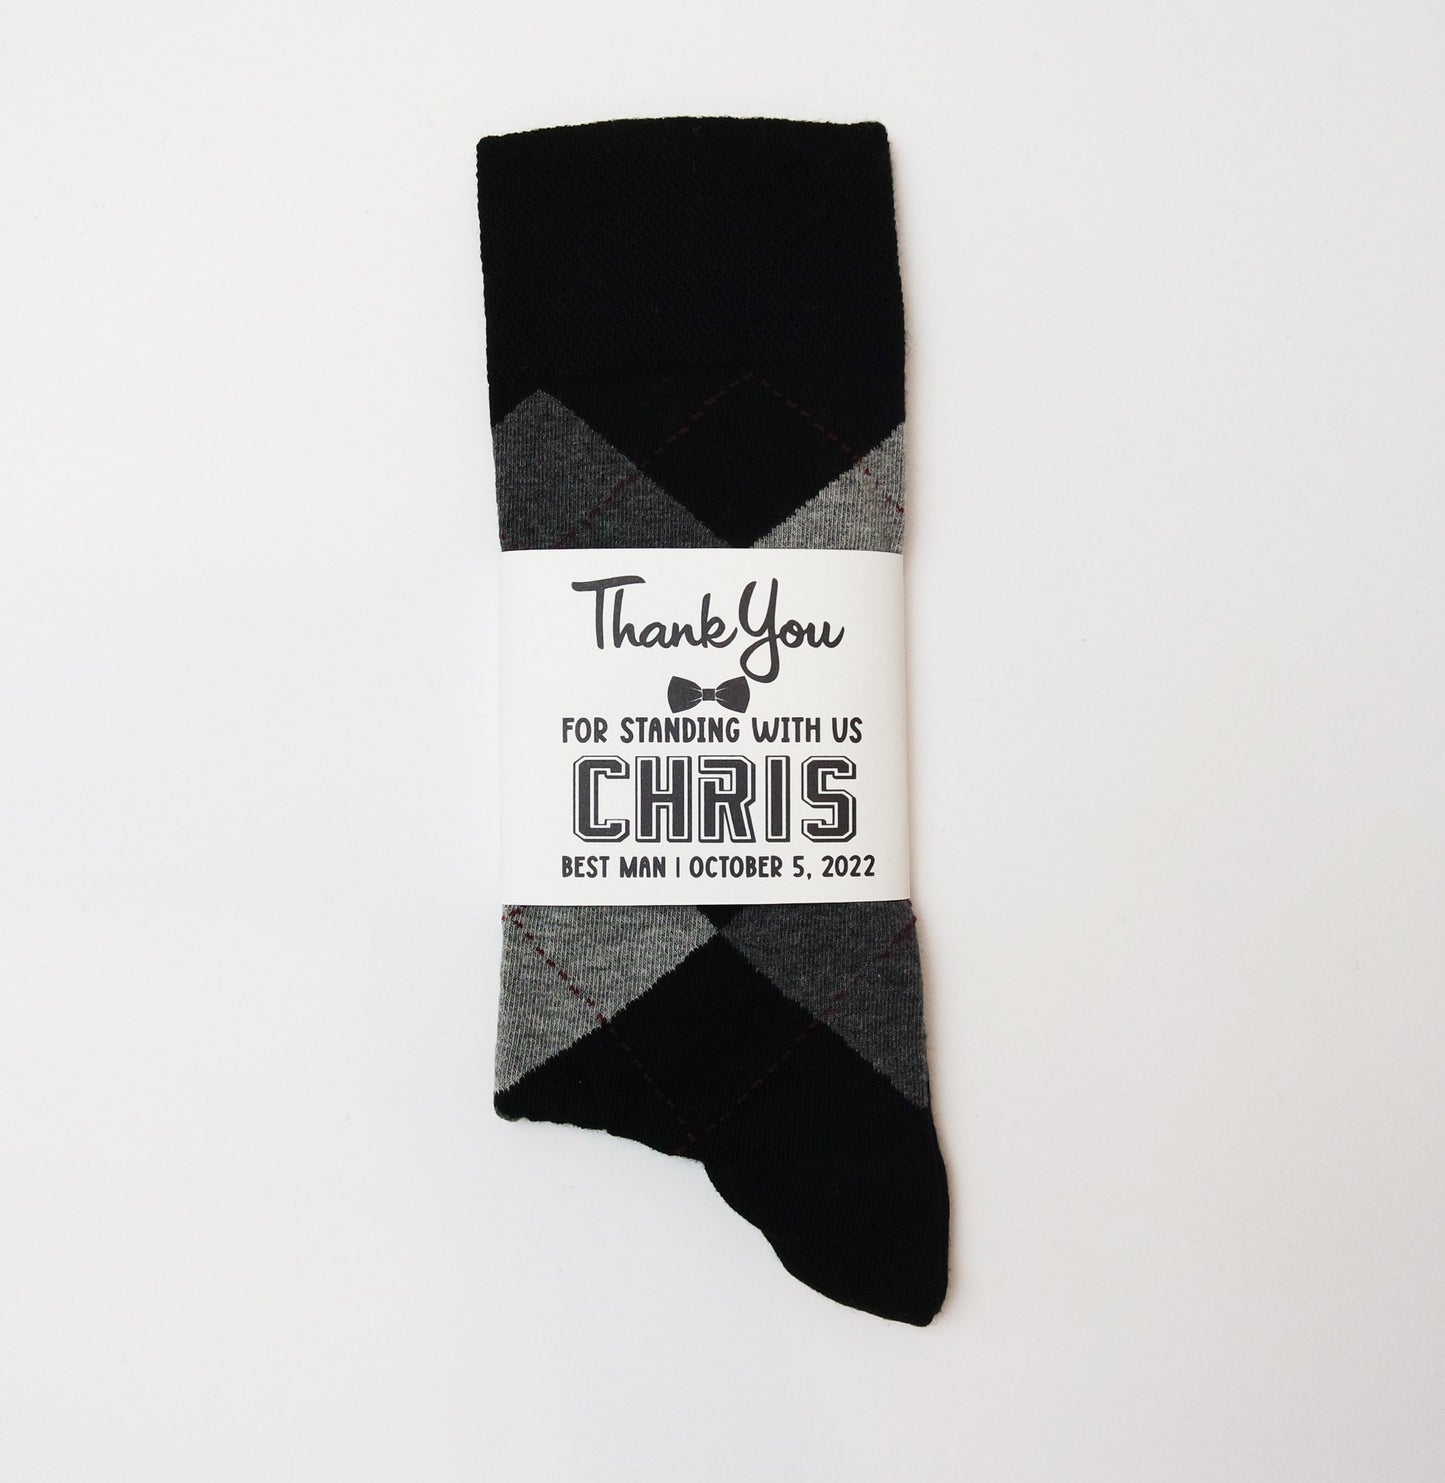 Best Man Socks, Groomsmen Socks, Wedding Socks, Custom Sock Labels, Personalized Groomsmen Gift Sock with Custom Labels, Groomsmen Proposal